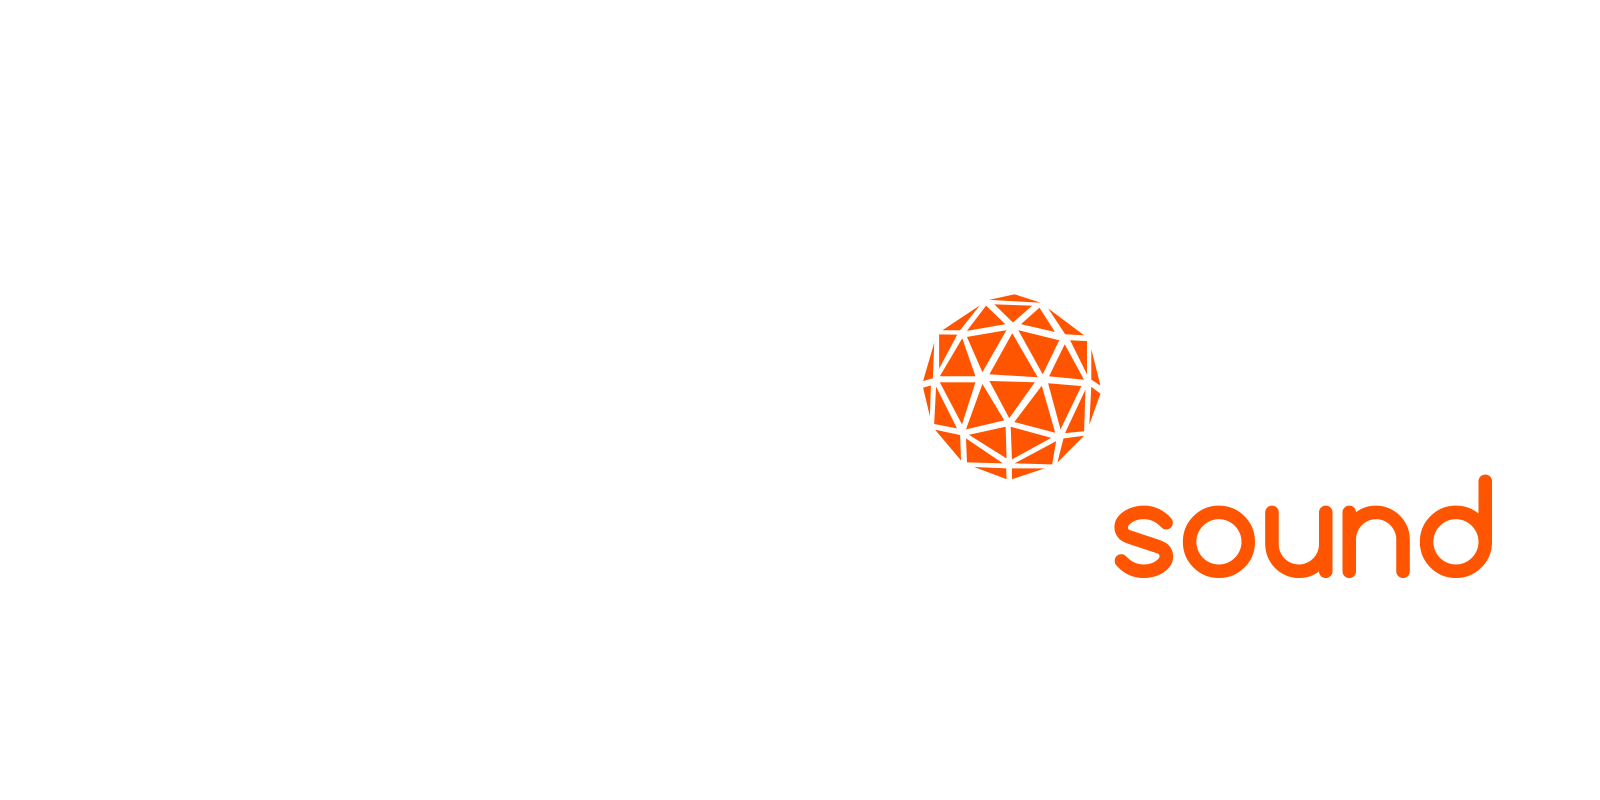 Electronic sound logo